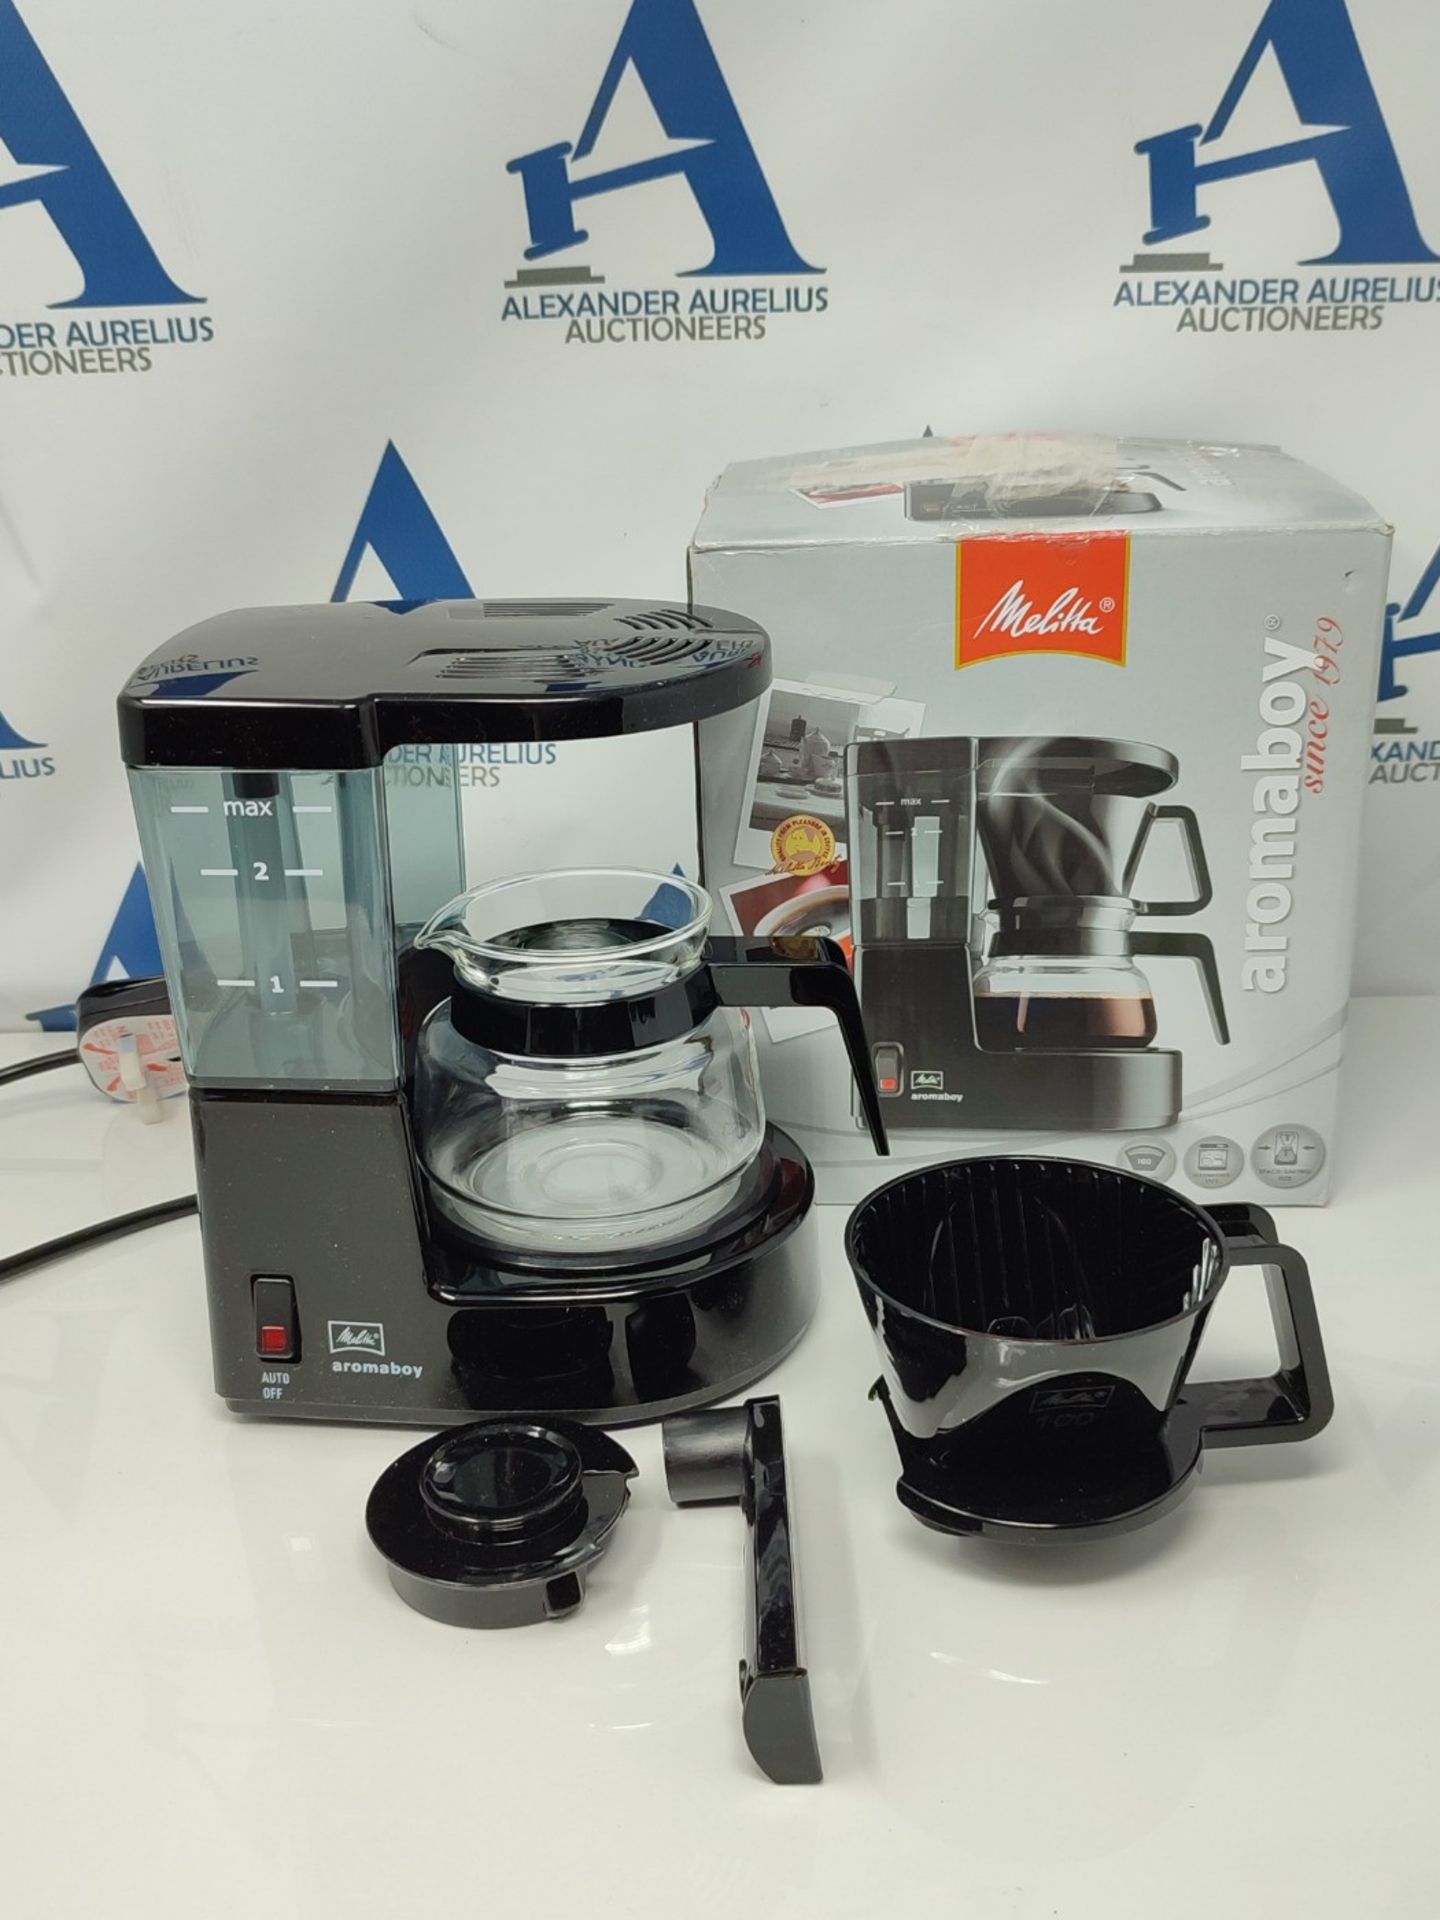 Melitta 6707286 Aroma Boy Filter Coffee Machine,0.34 liters, 500 W, Black - Image 2 of 3